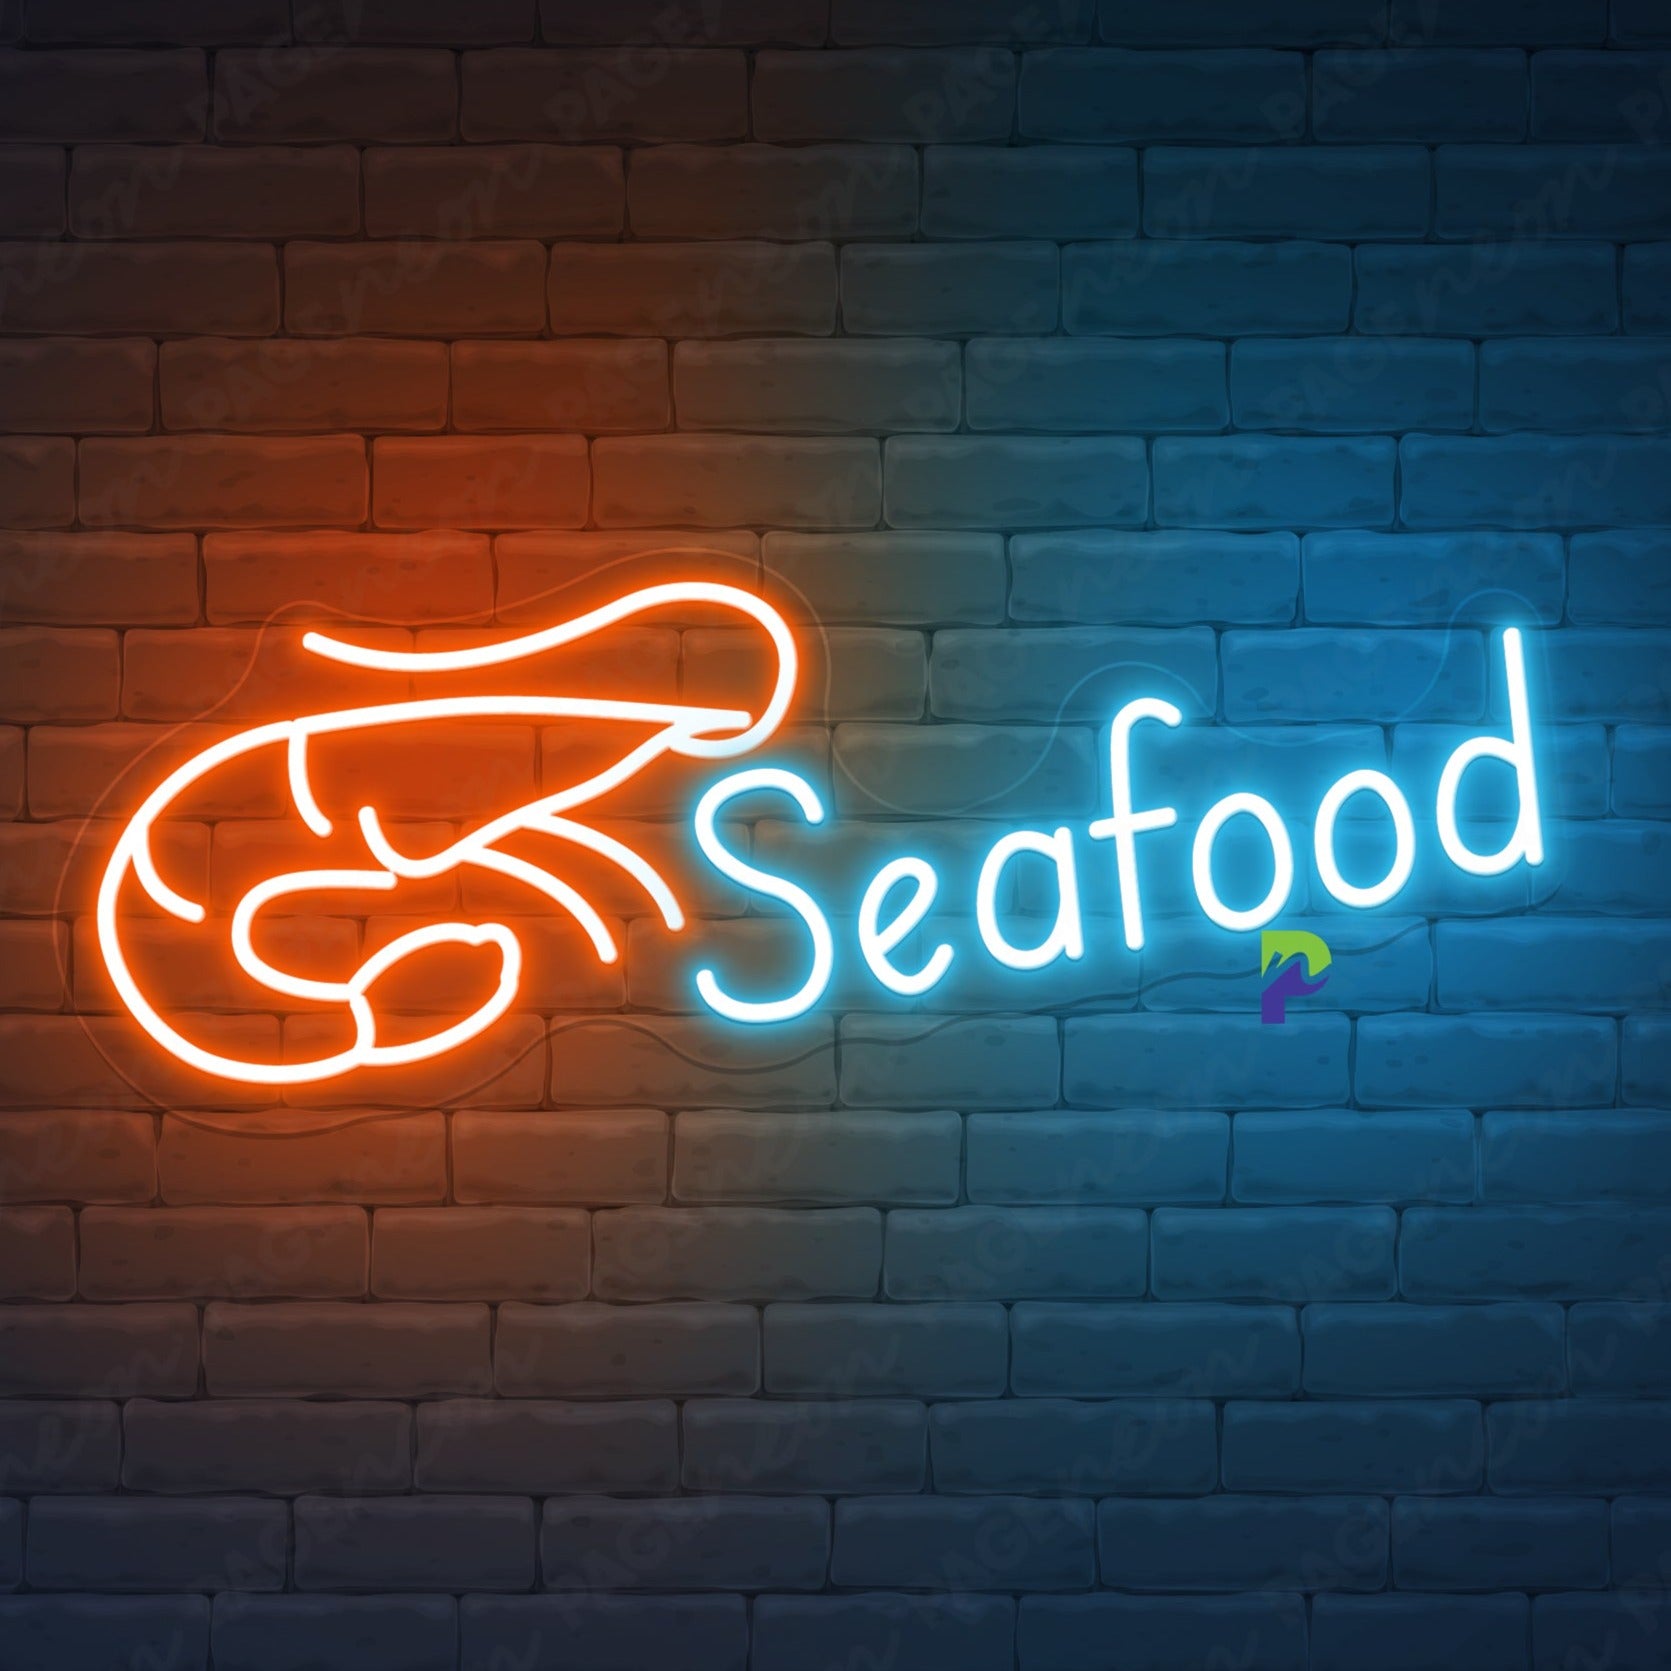 Seafood Neon Sign Restaurant Led Light